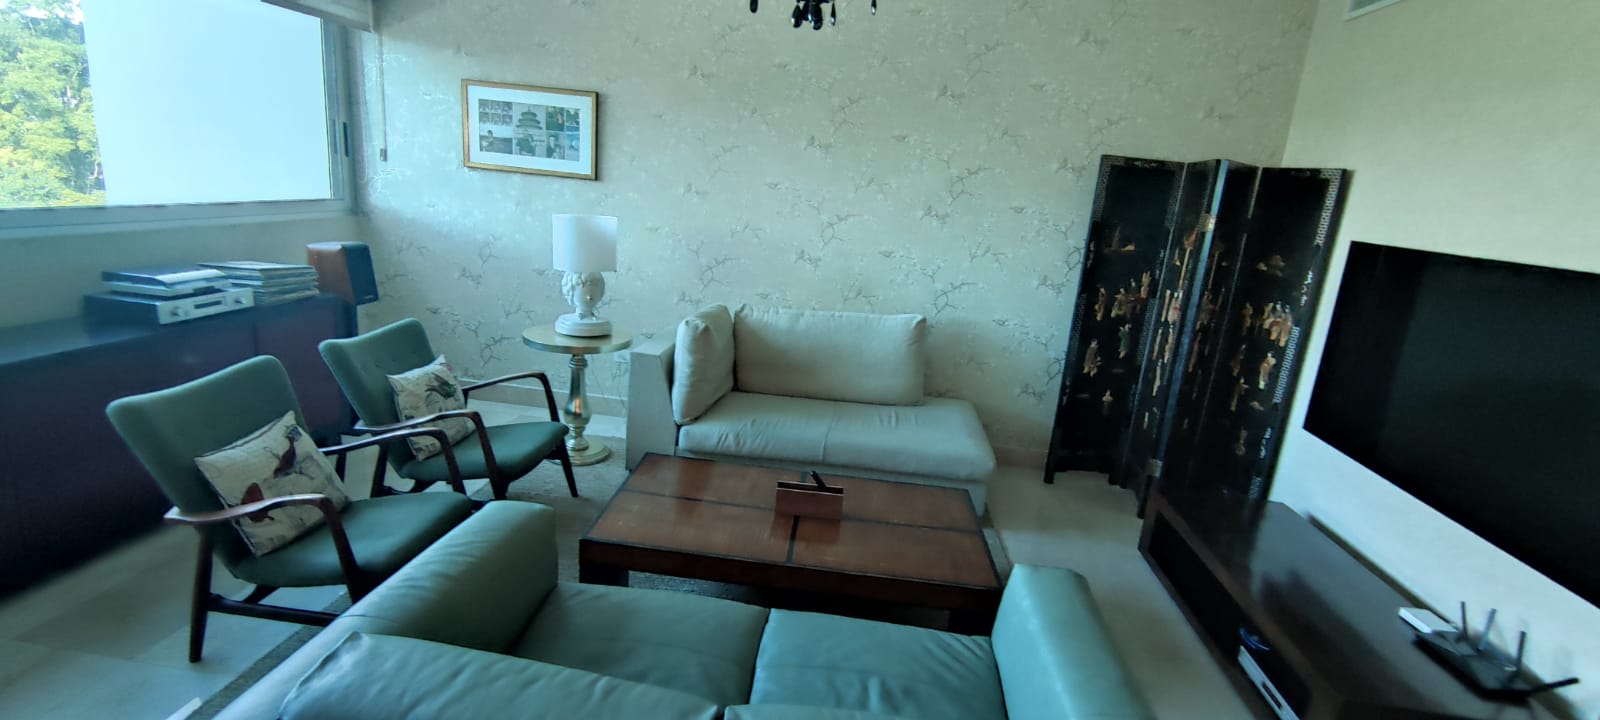 Beautiful 4-Bedroom Condo in PH Arboleda, Panama City - Property ID PLS-18551